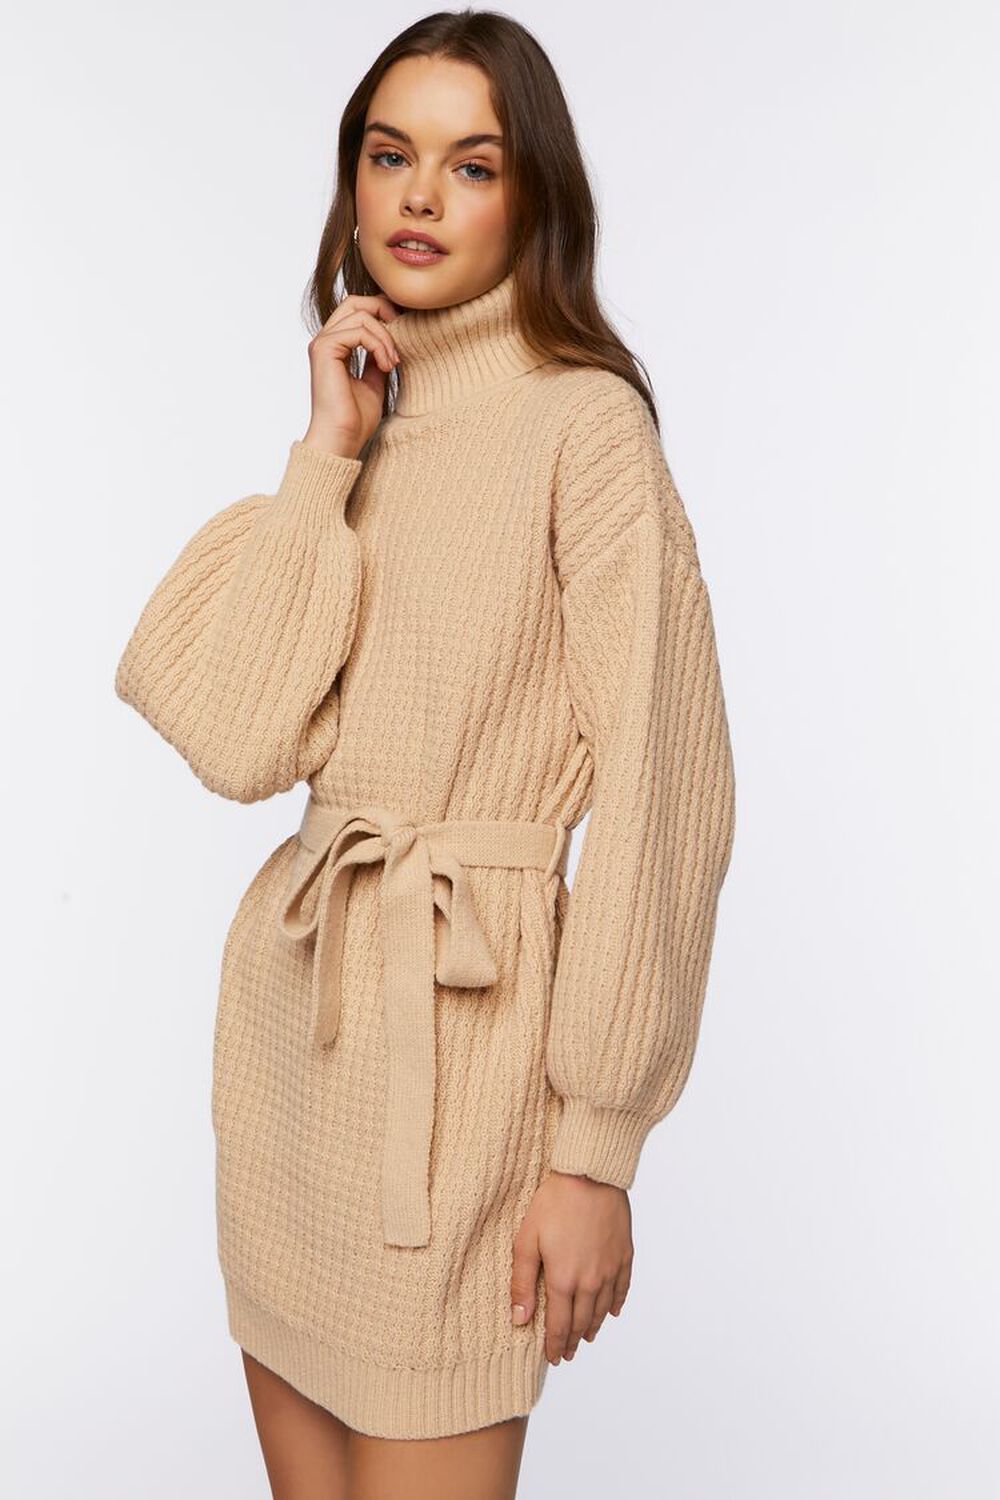 OATMEAL Turtleneck Mini Sweater Dress, image 2